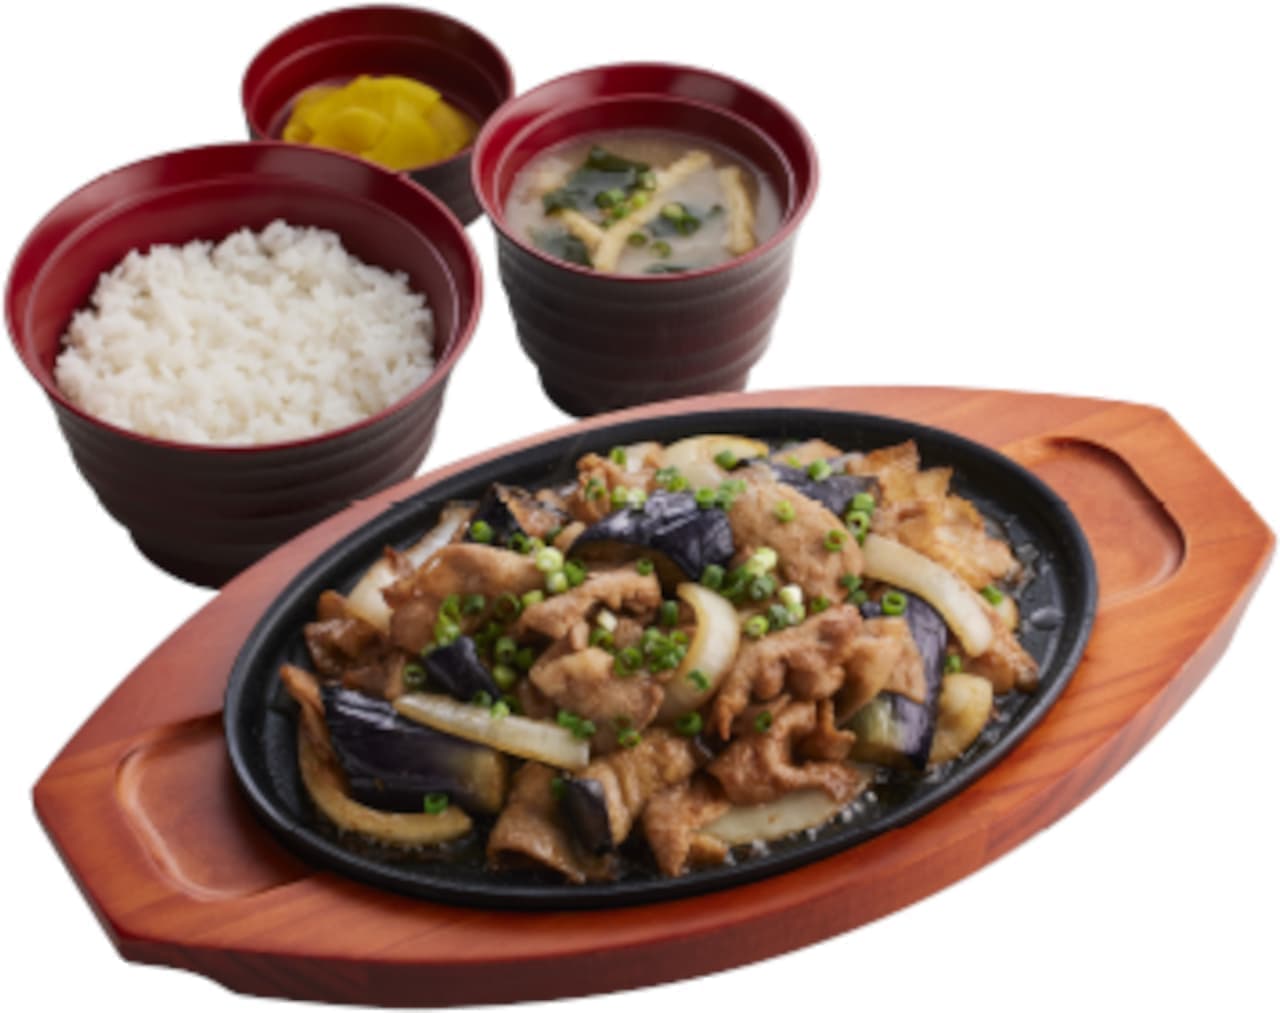 Joyful "Stir-fried pork and eggplant with miso" set meal